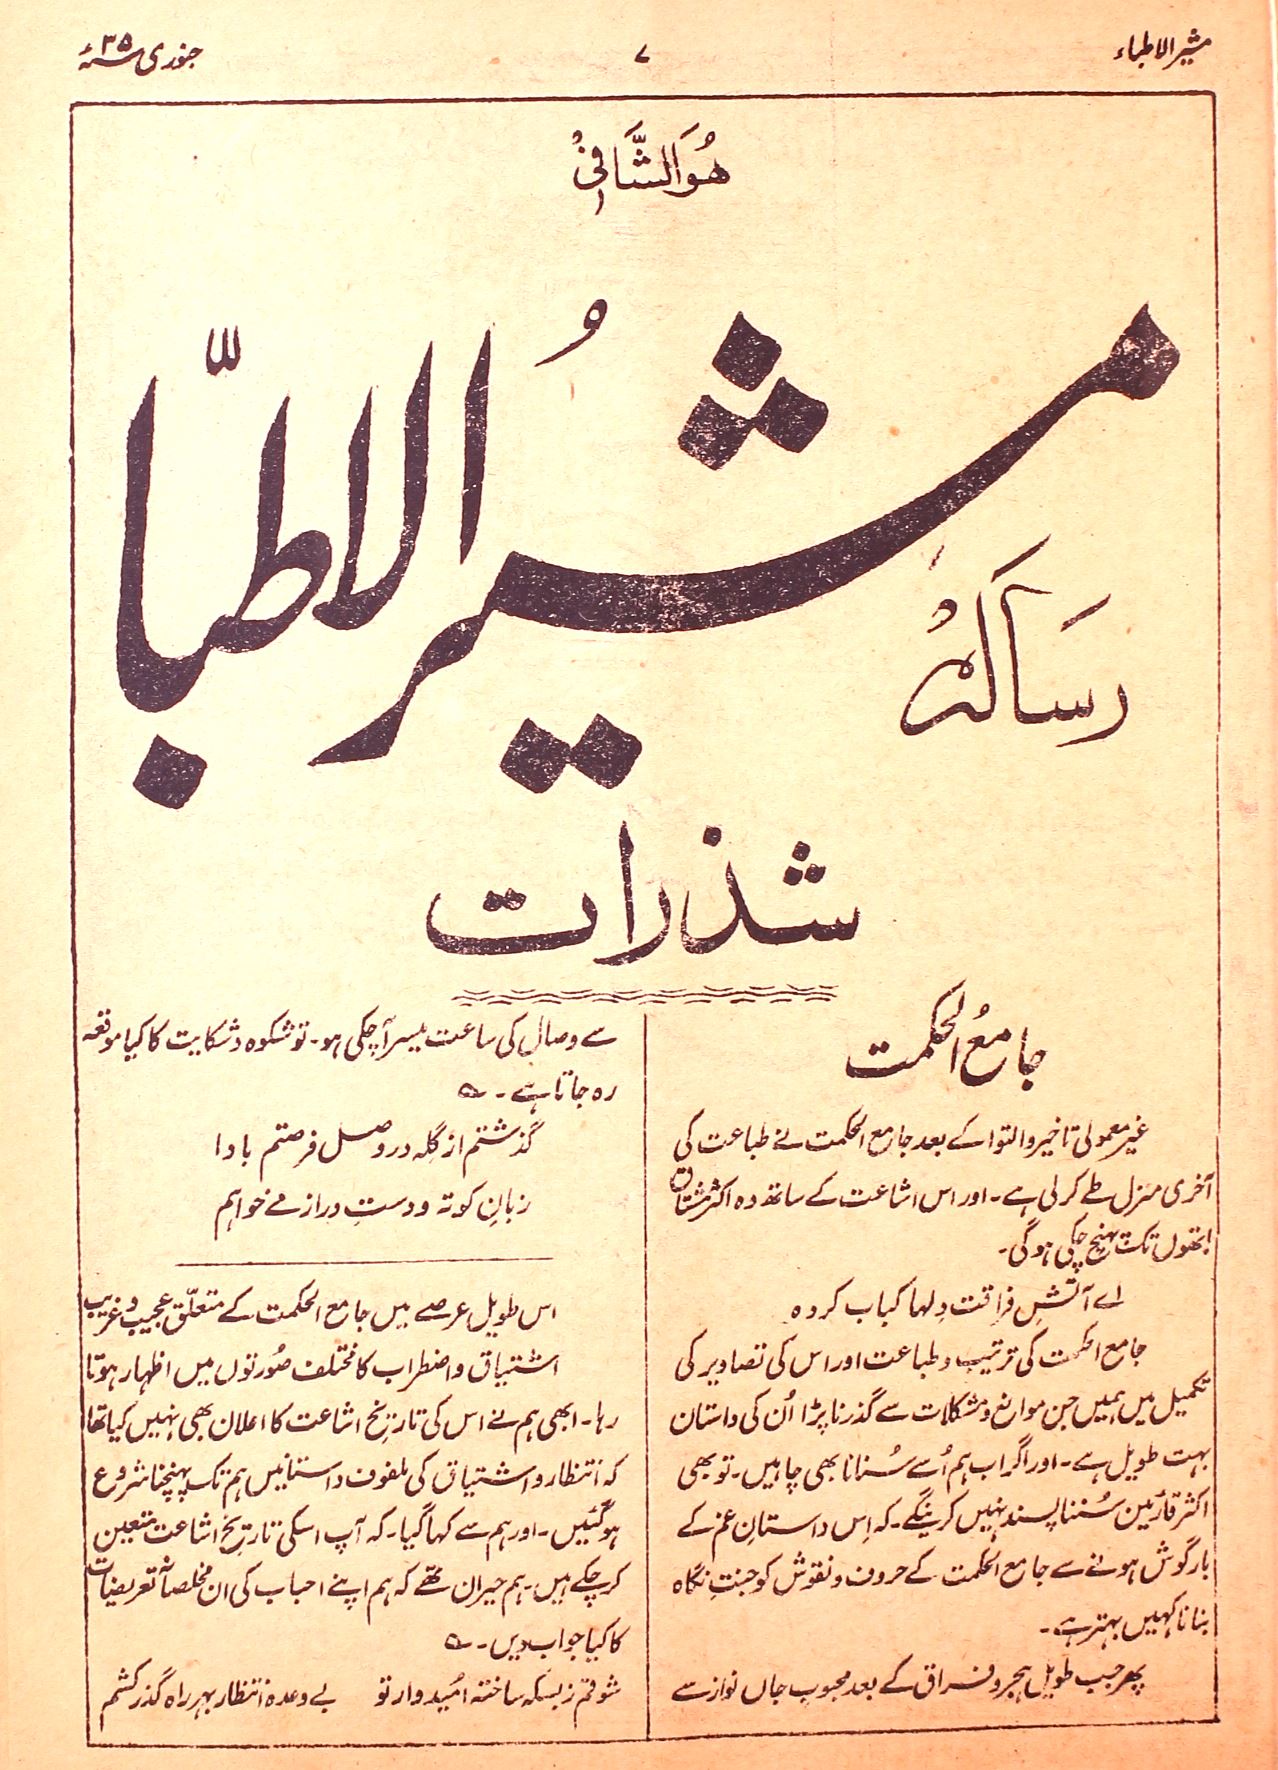 MasheerUl Attiba Jild 13 No 4 January 1935-GNTC-Shumara Number-004